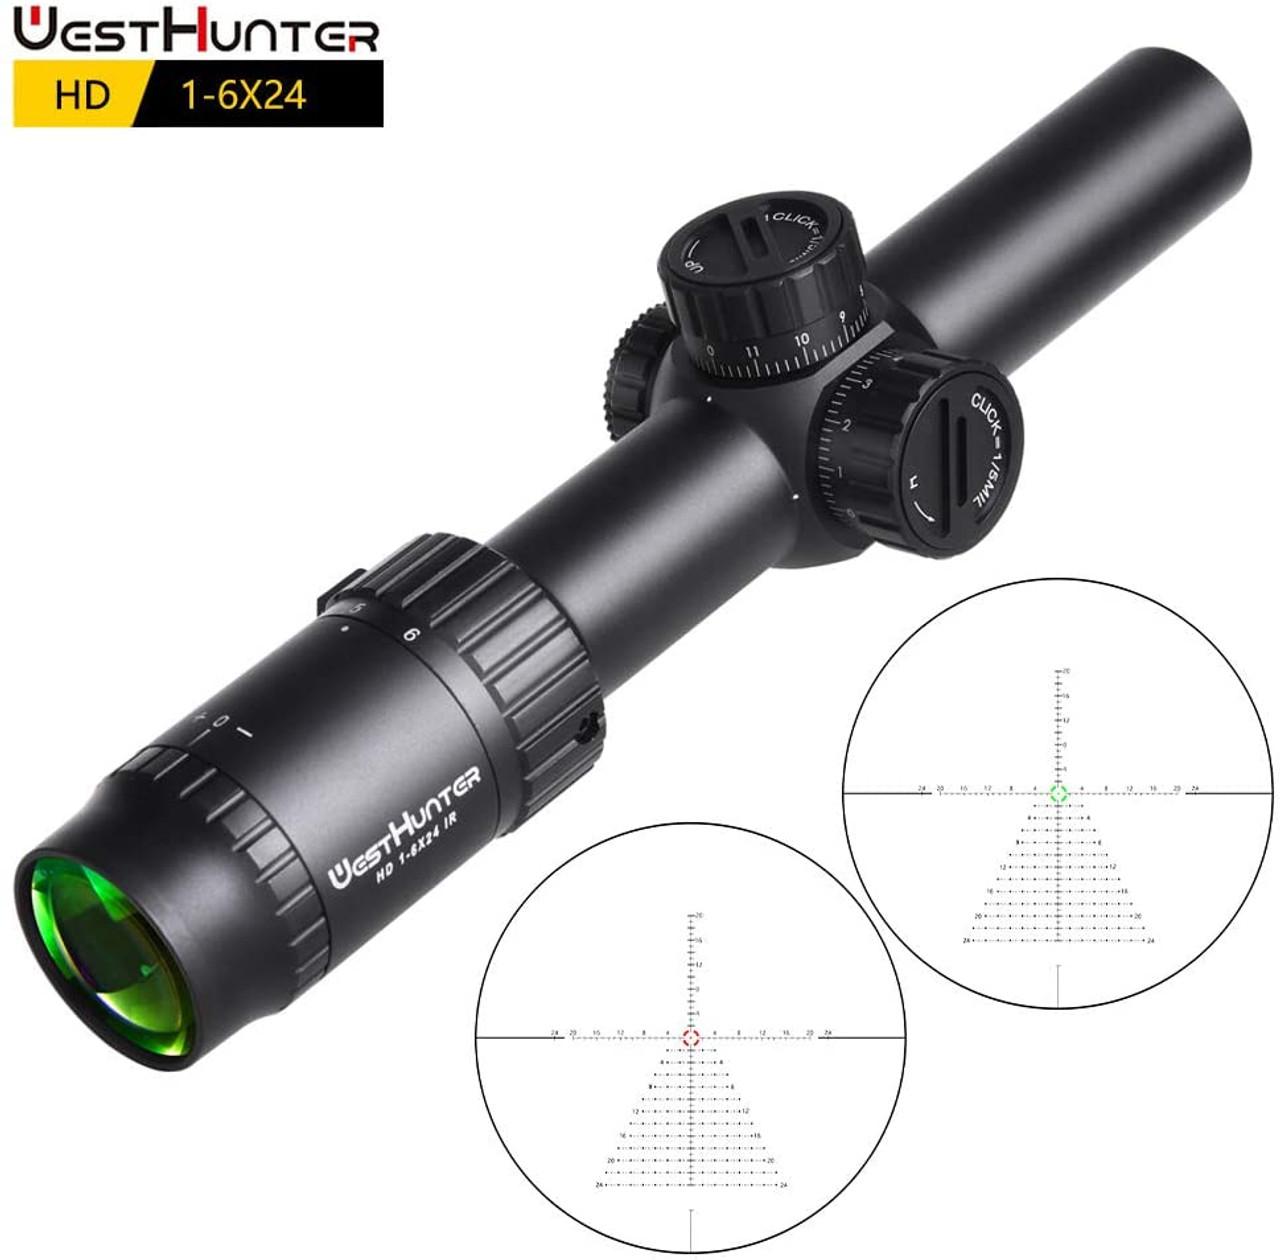 WestHunter Optics HD 1-6X24 IR Hunting Rifle Scope, 30mm Red-Green Illuminated Reticle 